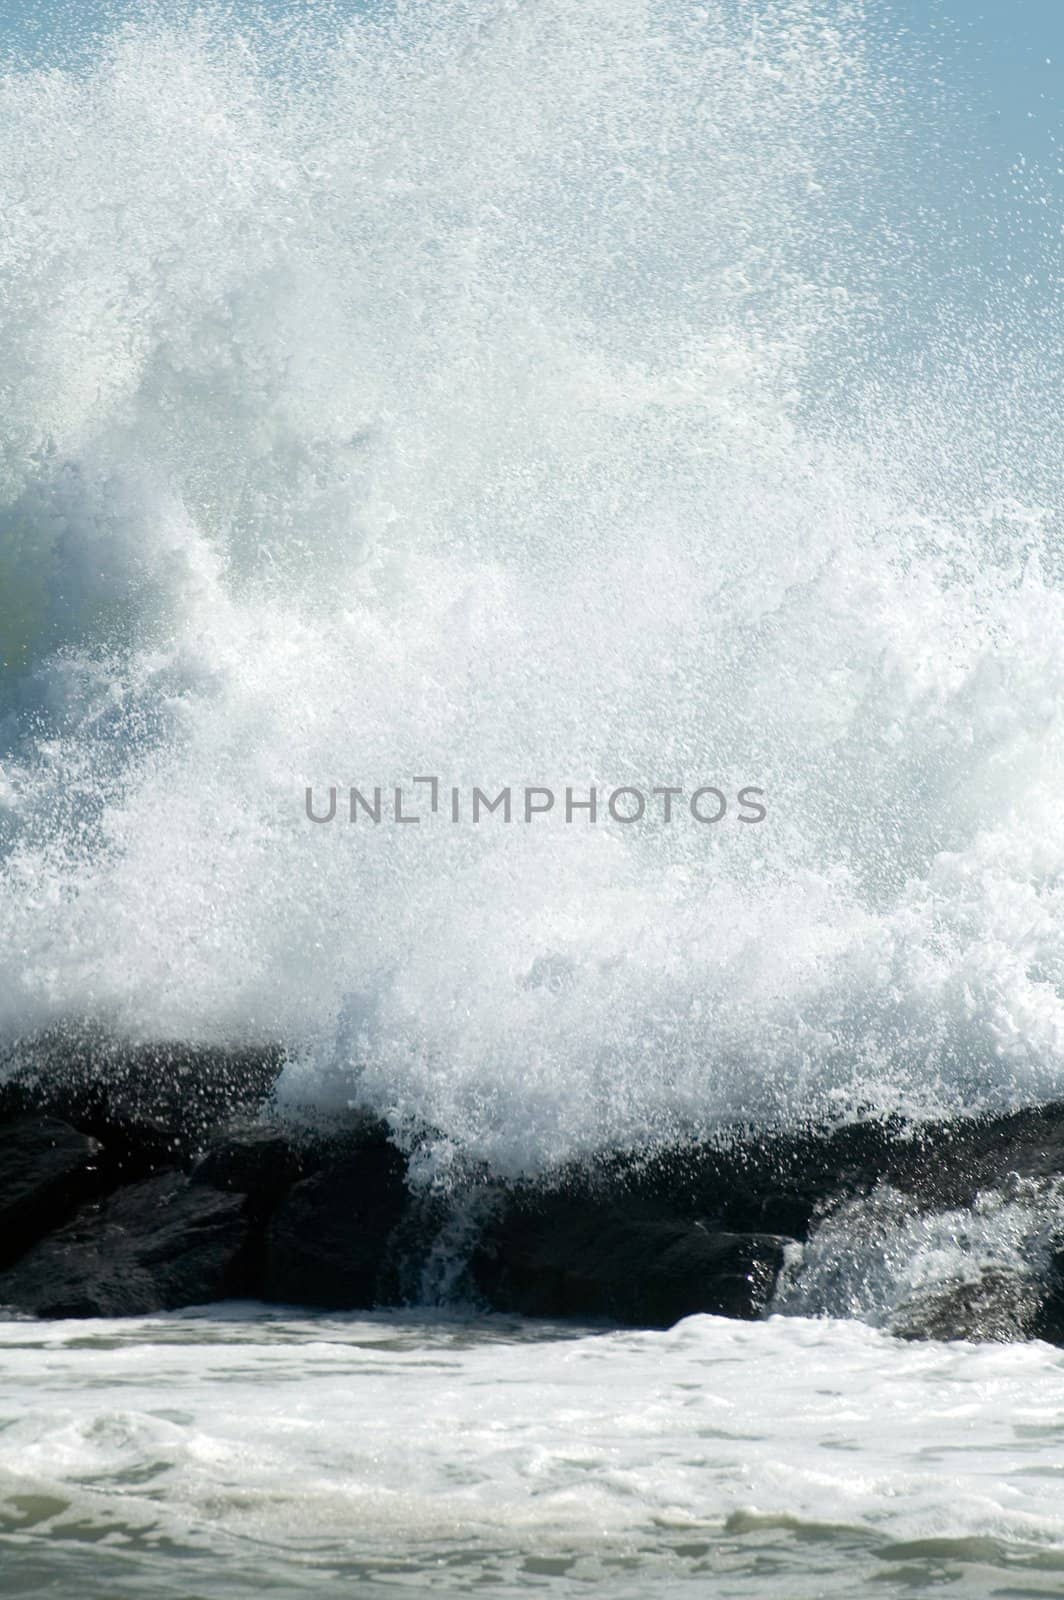 huge white wave crushing on coastline rocks